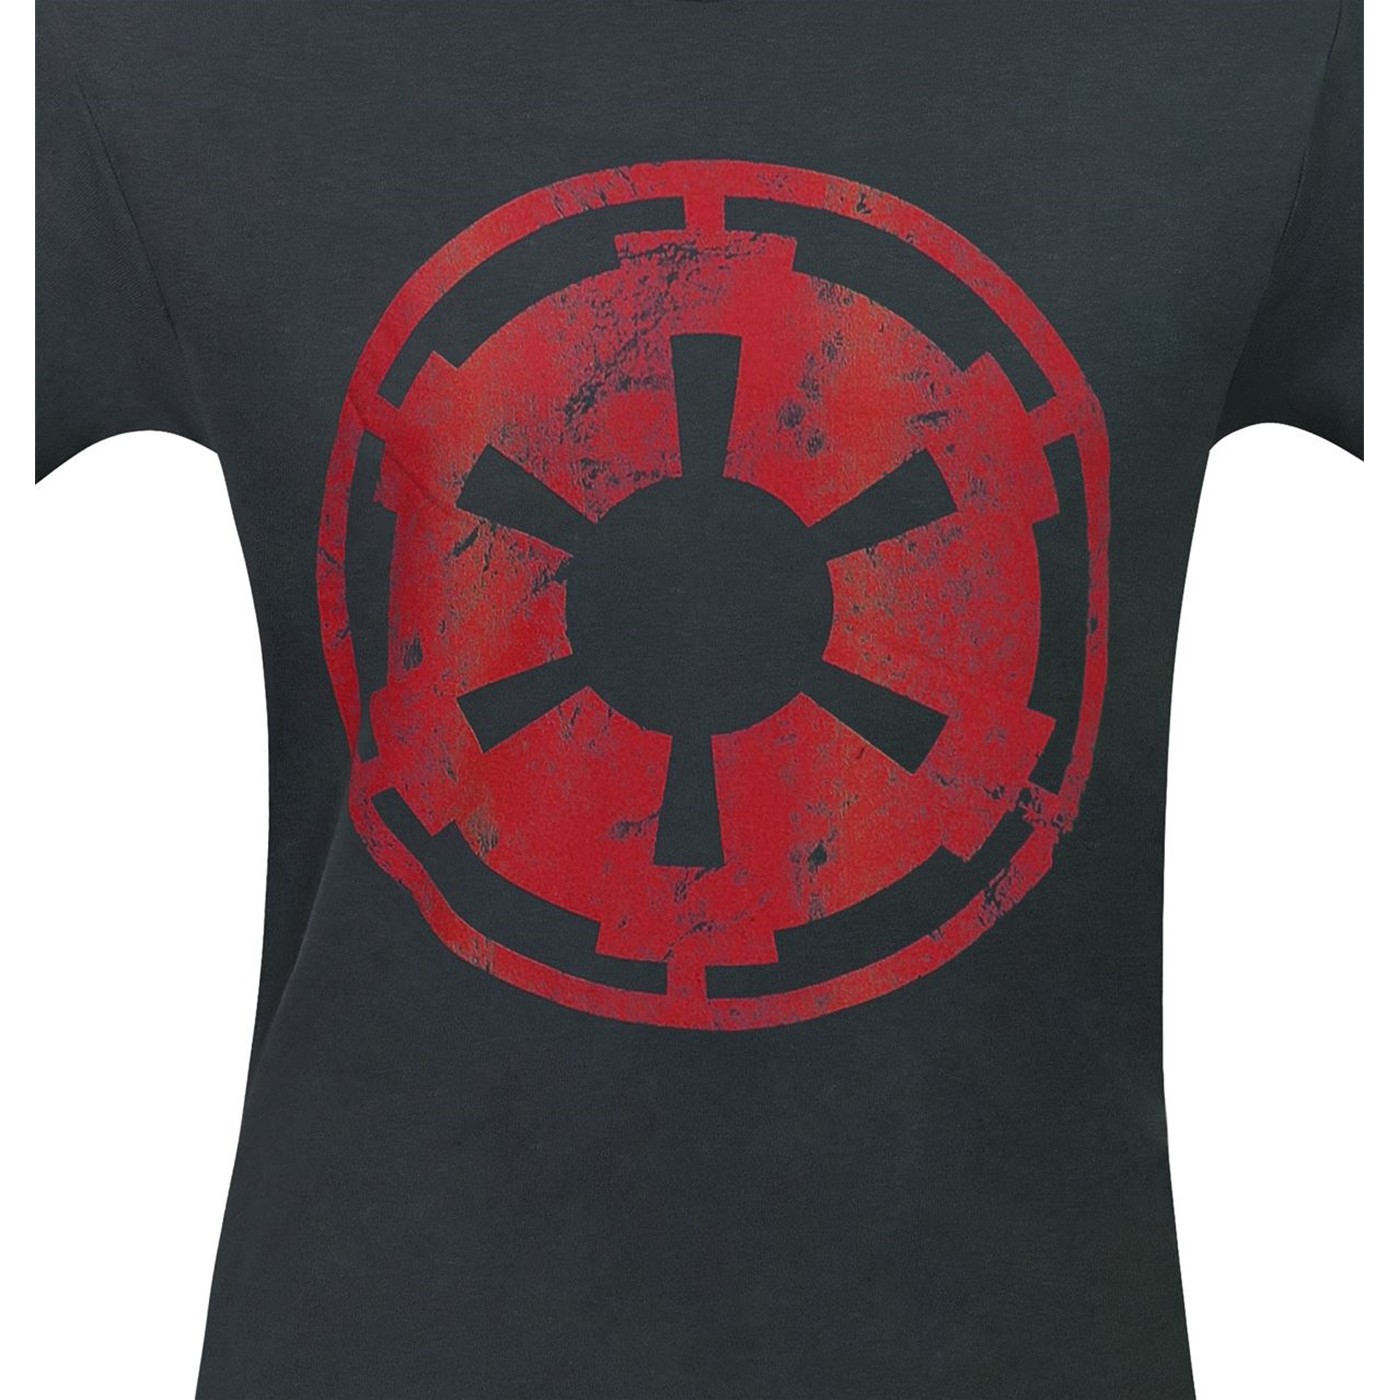 Star Wars Empire Crest Distressed Men's T-Shirt